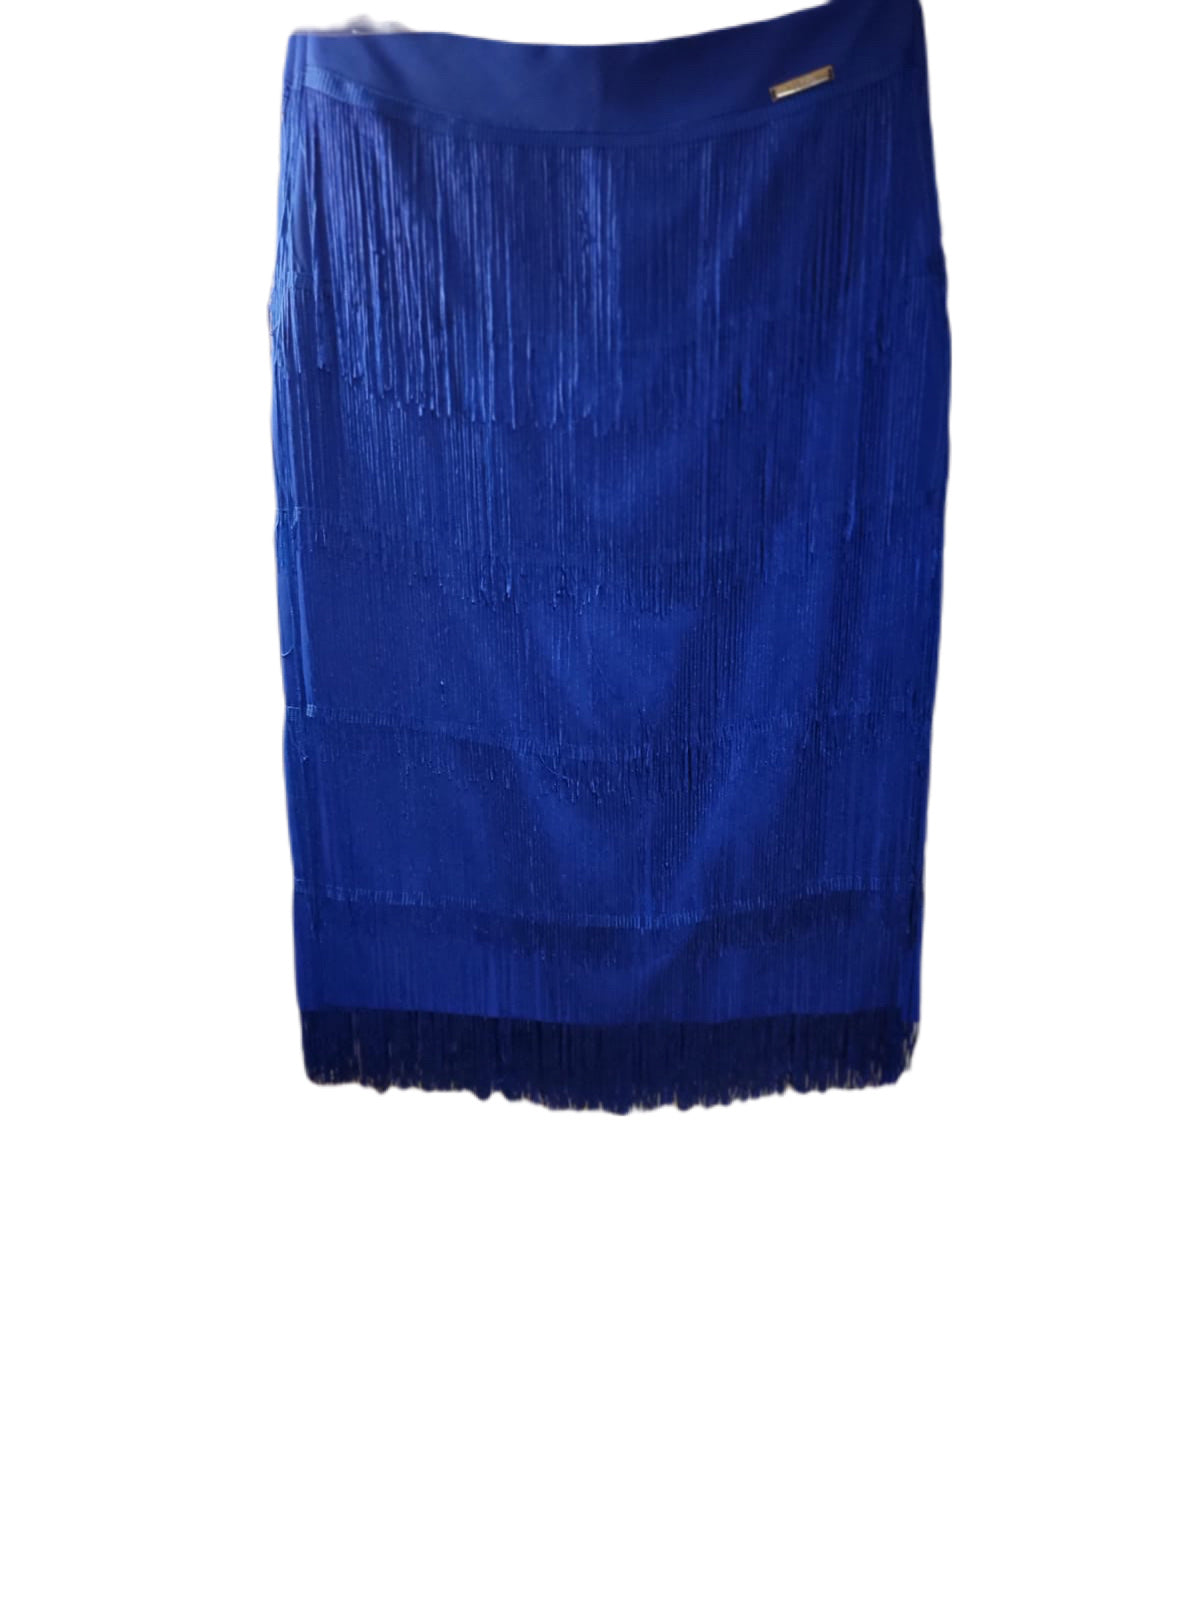 Short Bottom Ruffled Women's Skirt - Godshandfashion - 44-small / Blue